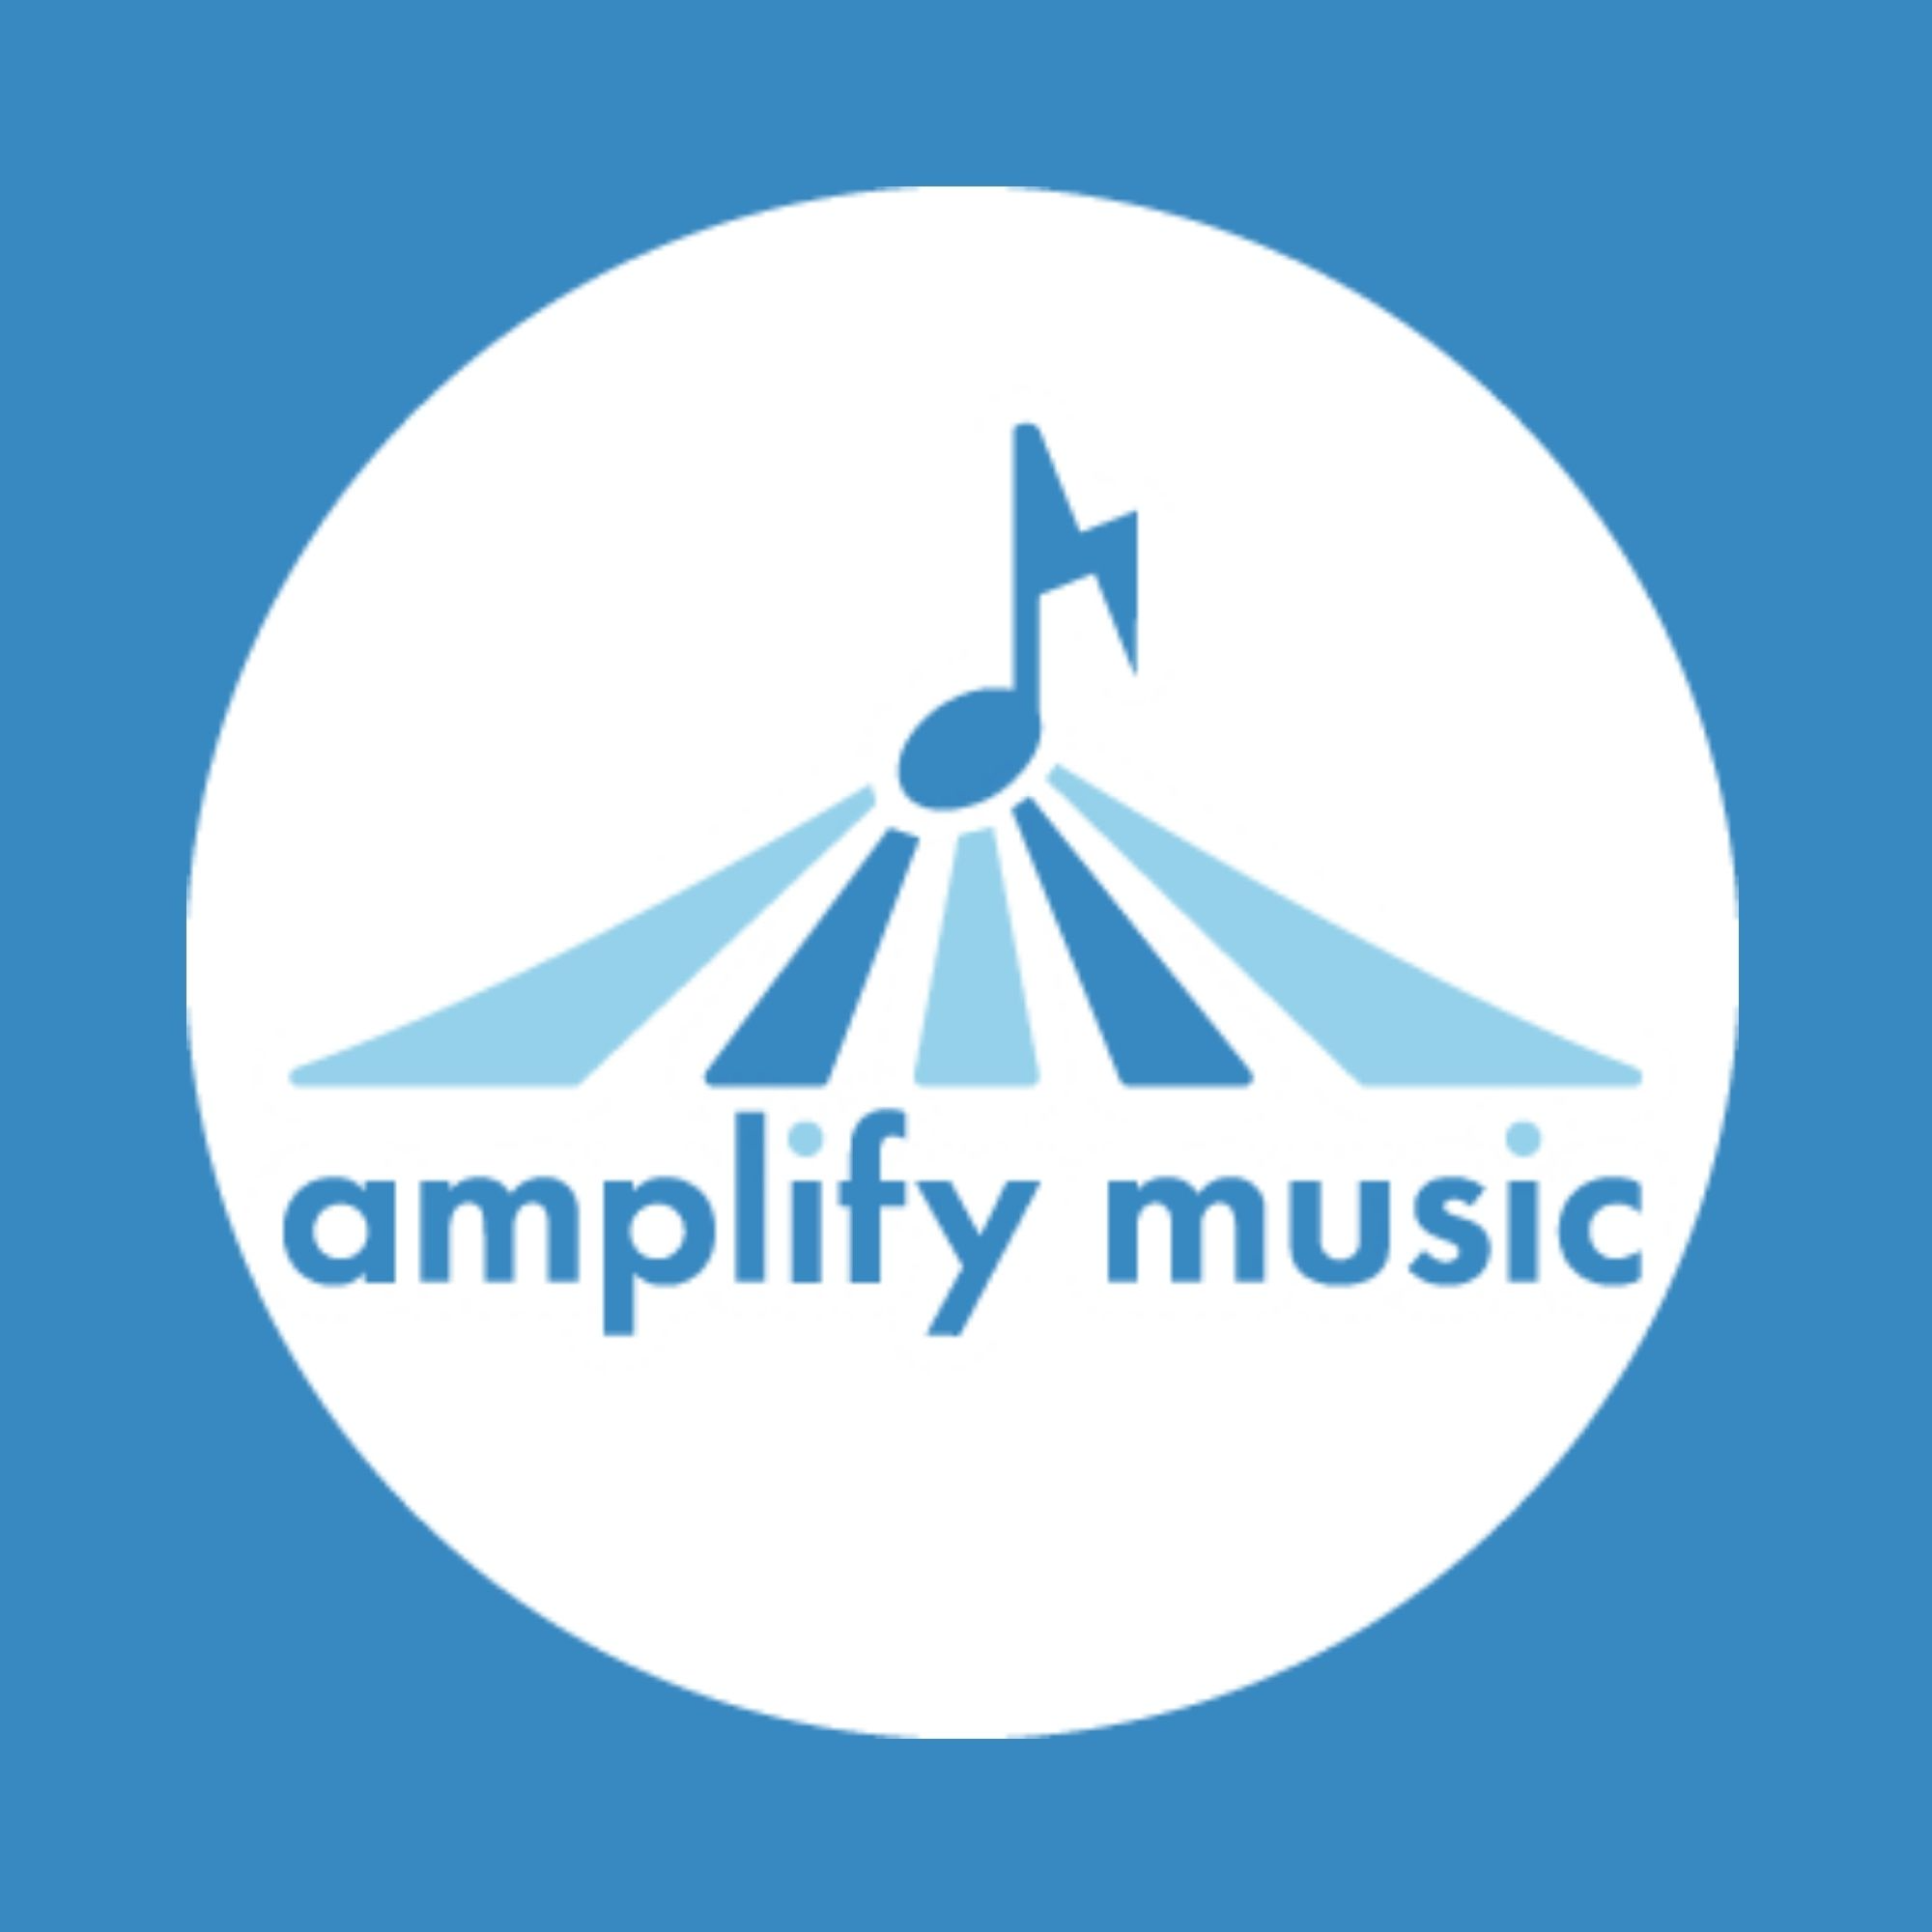 Amplify Music Communities